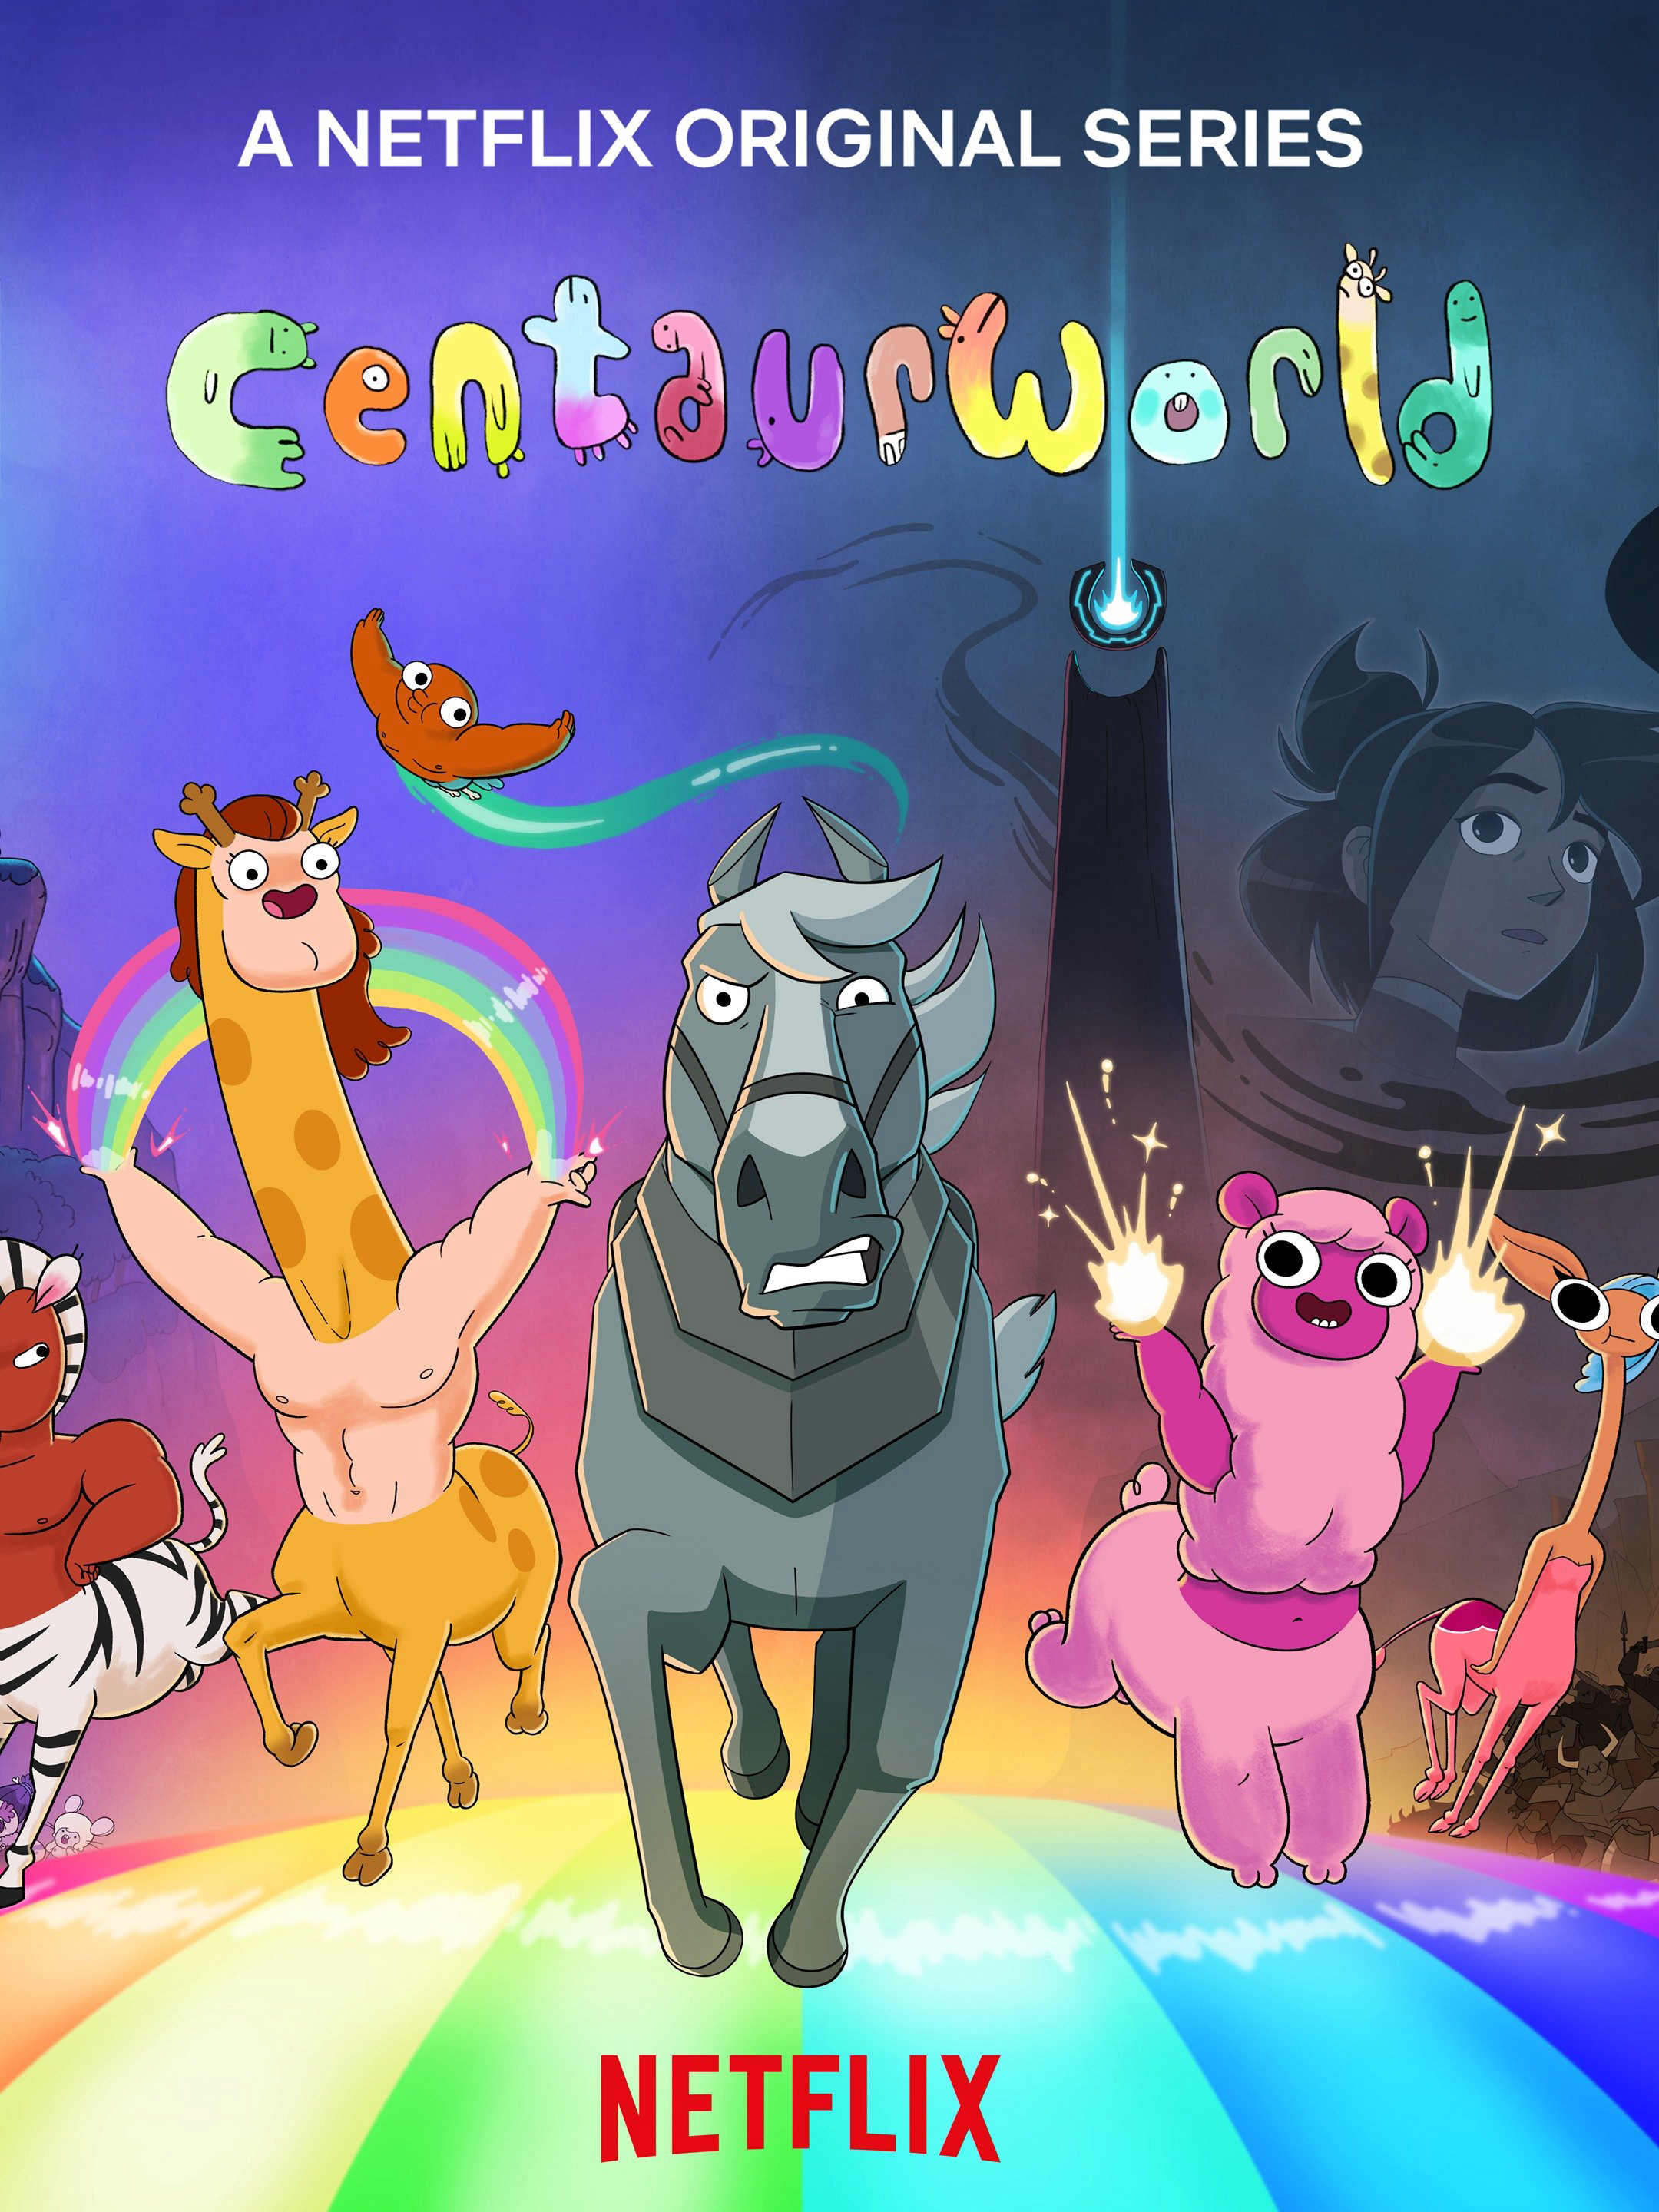 Thế giới nhân mã (Phần 2) - Centaurworld (Season 2)